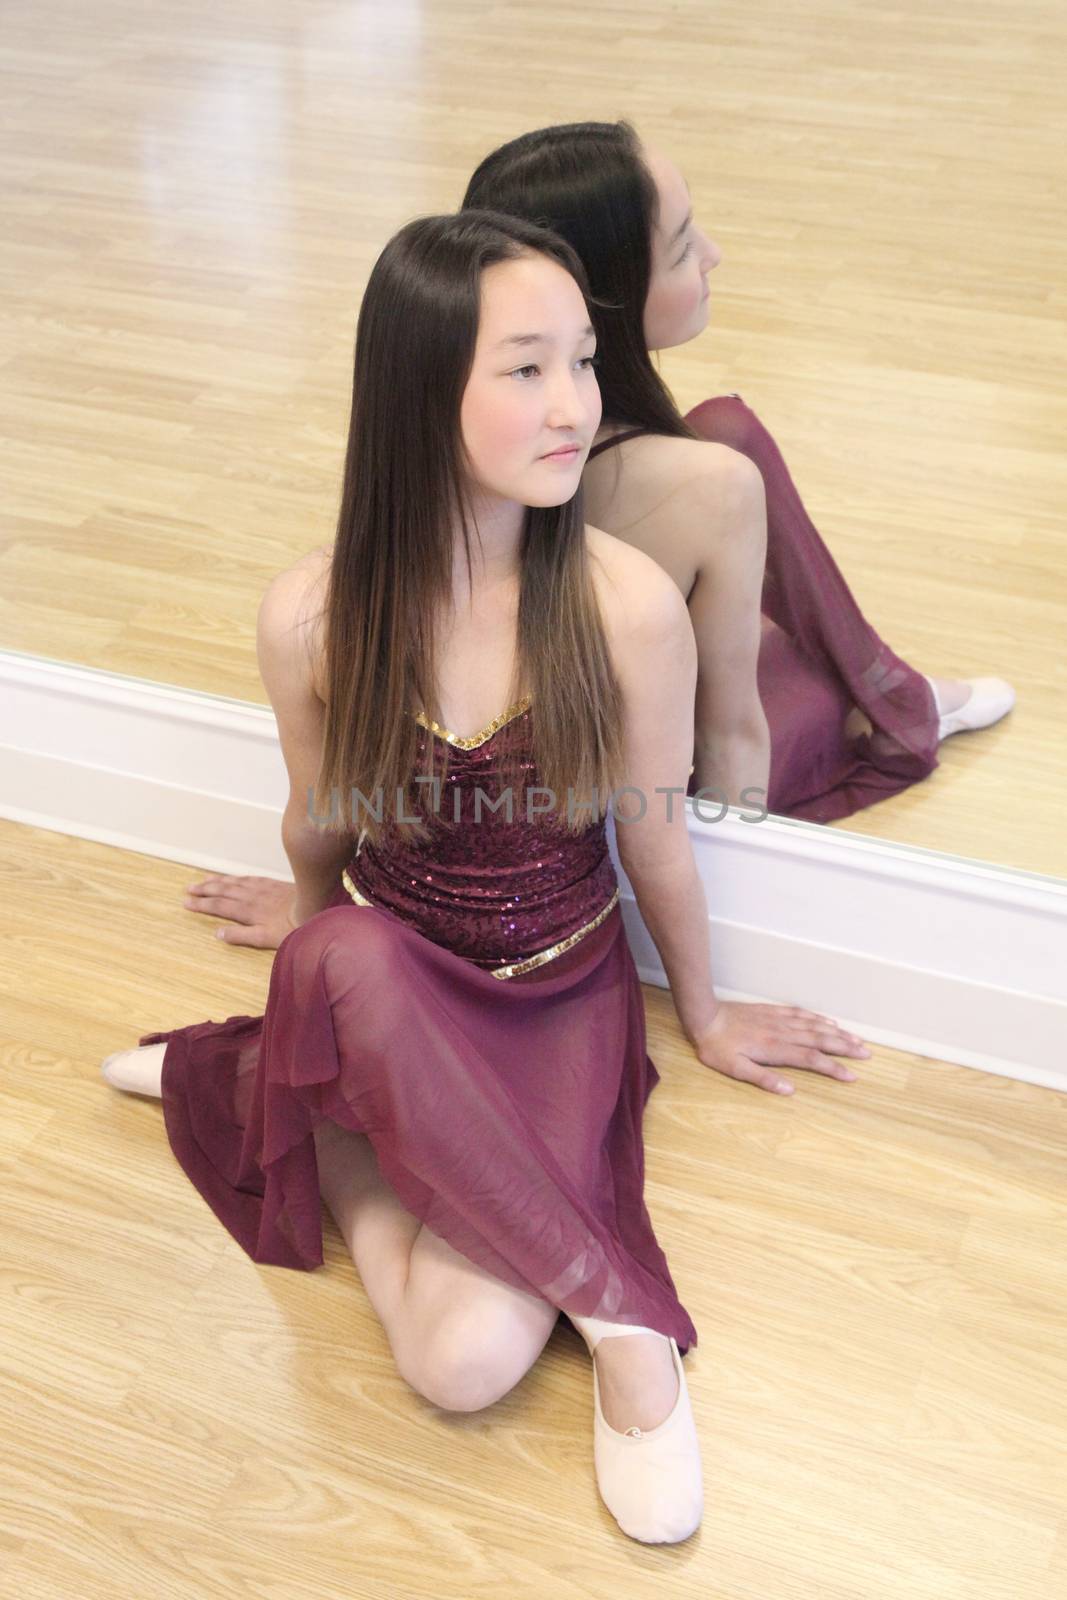 Beautiful brunette teen dancer in a burgundy costume